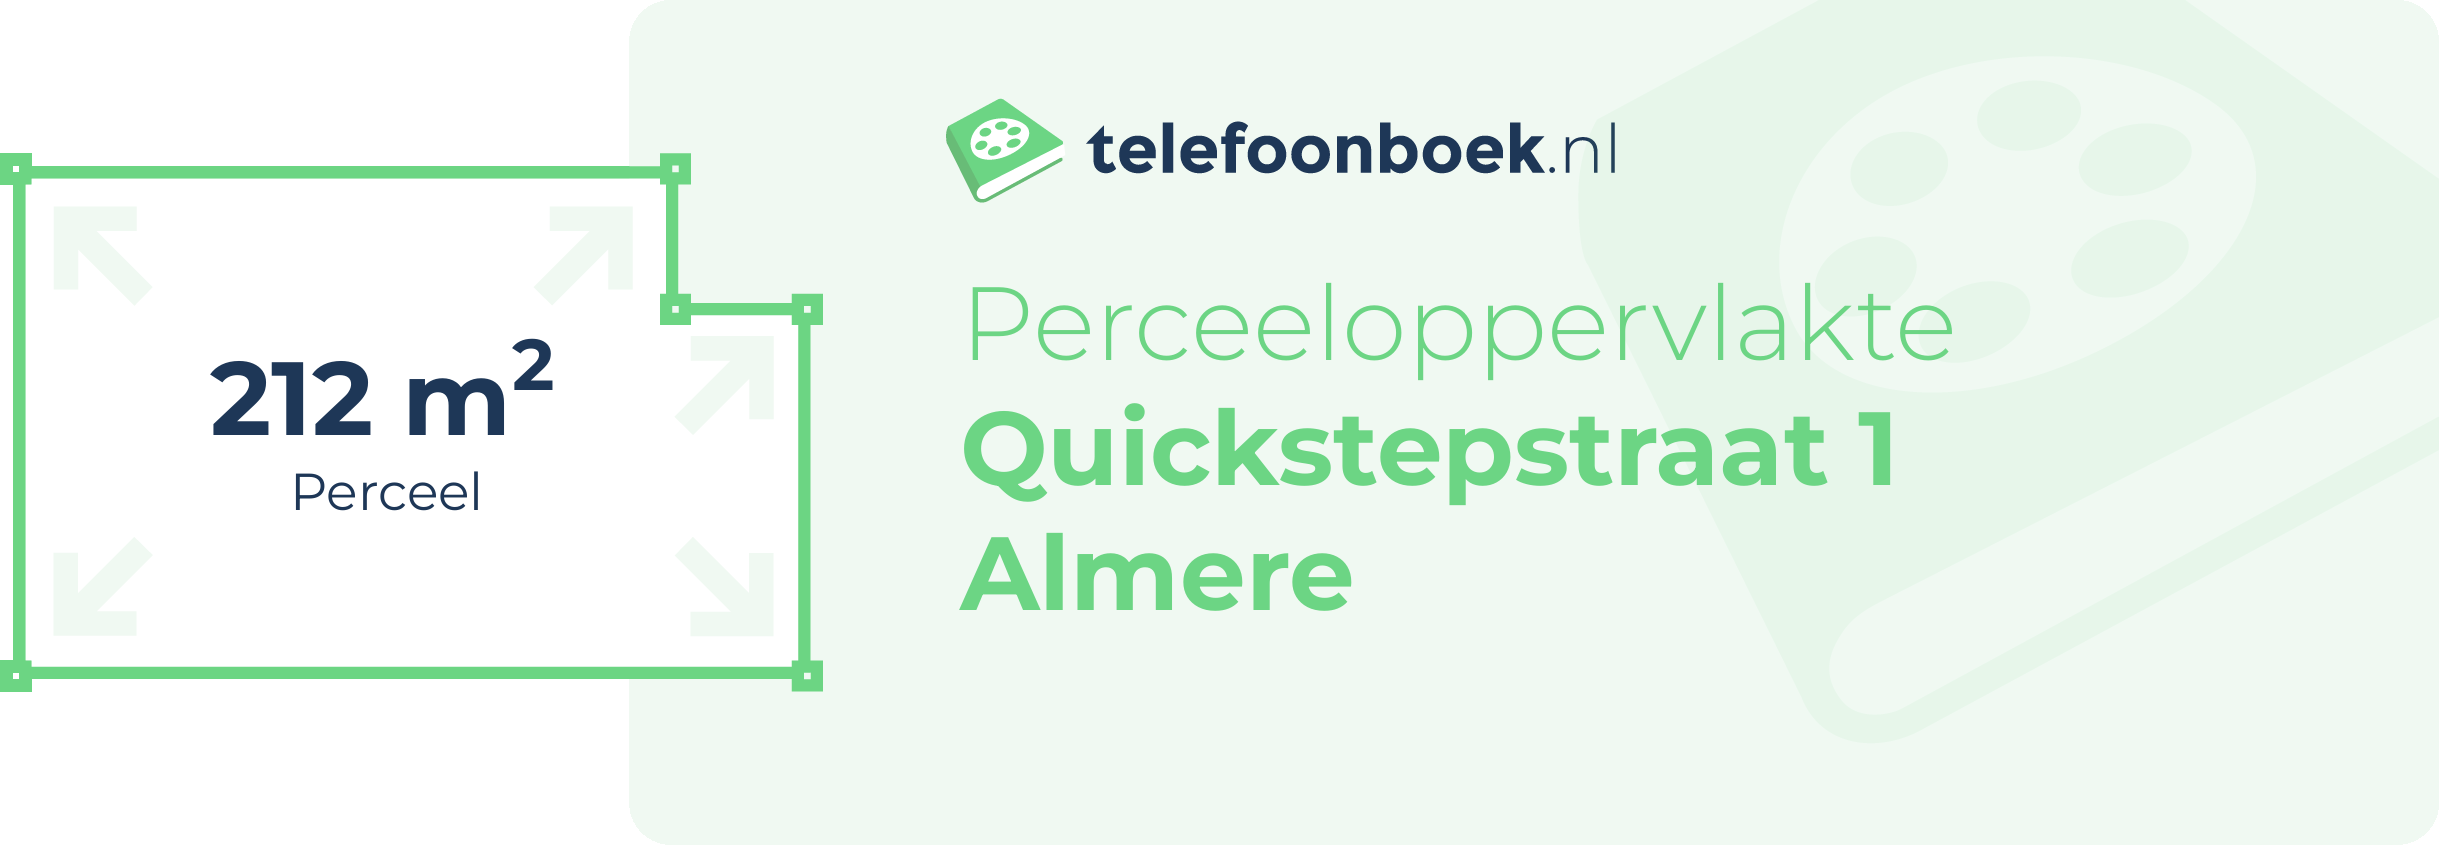 Perceeloppervlakte Quickstepstraat 1 Almere